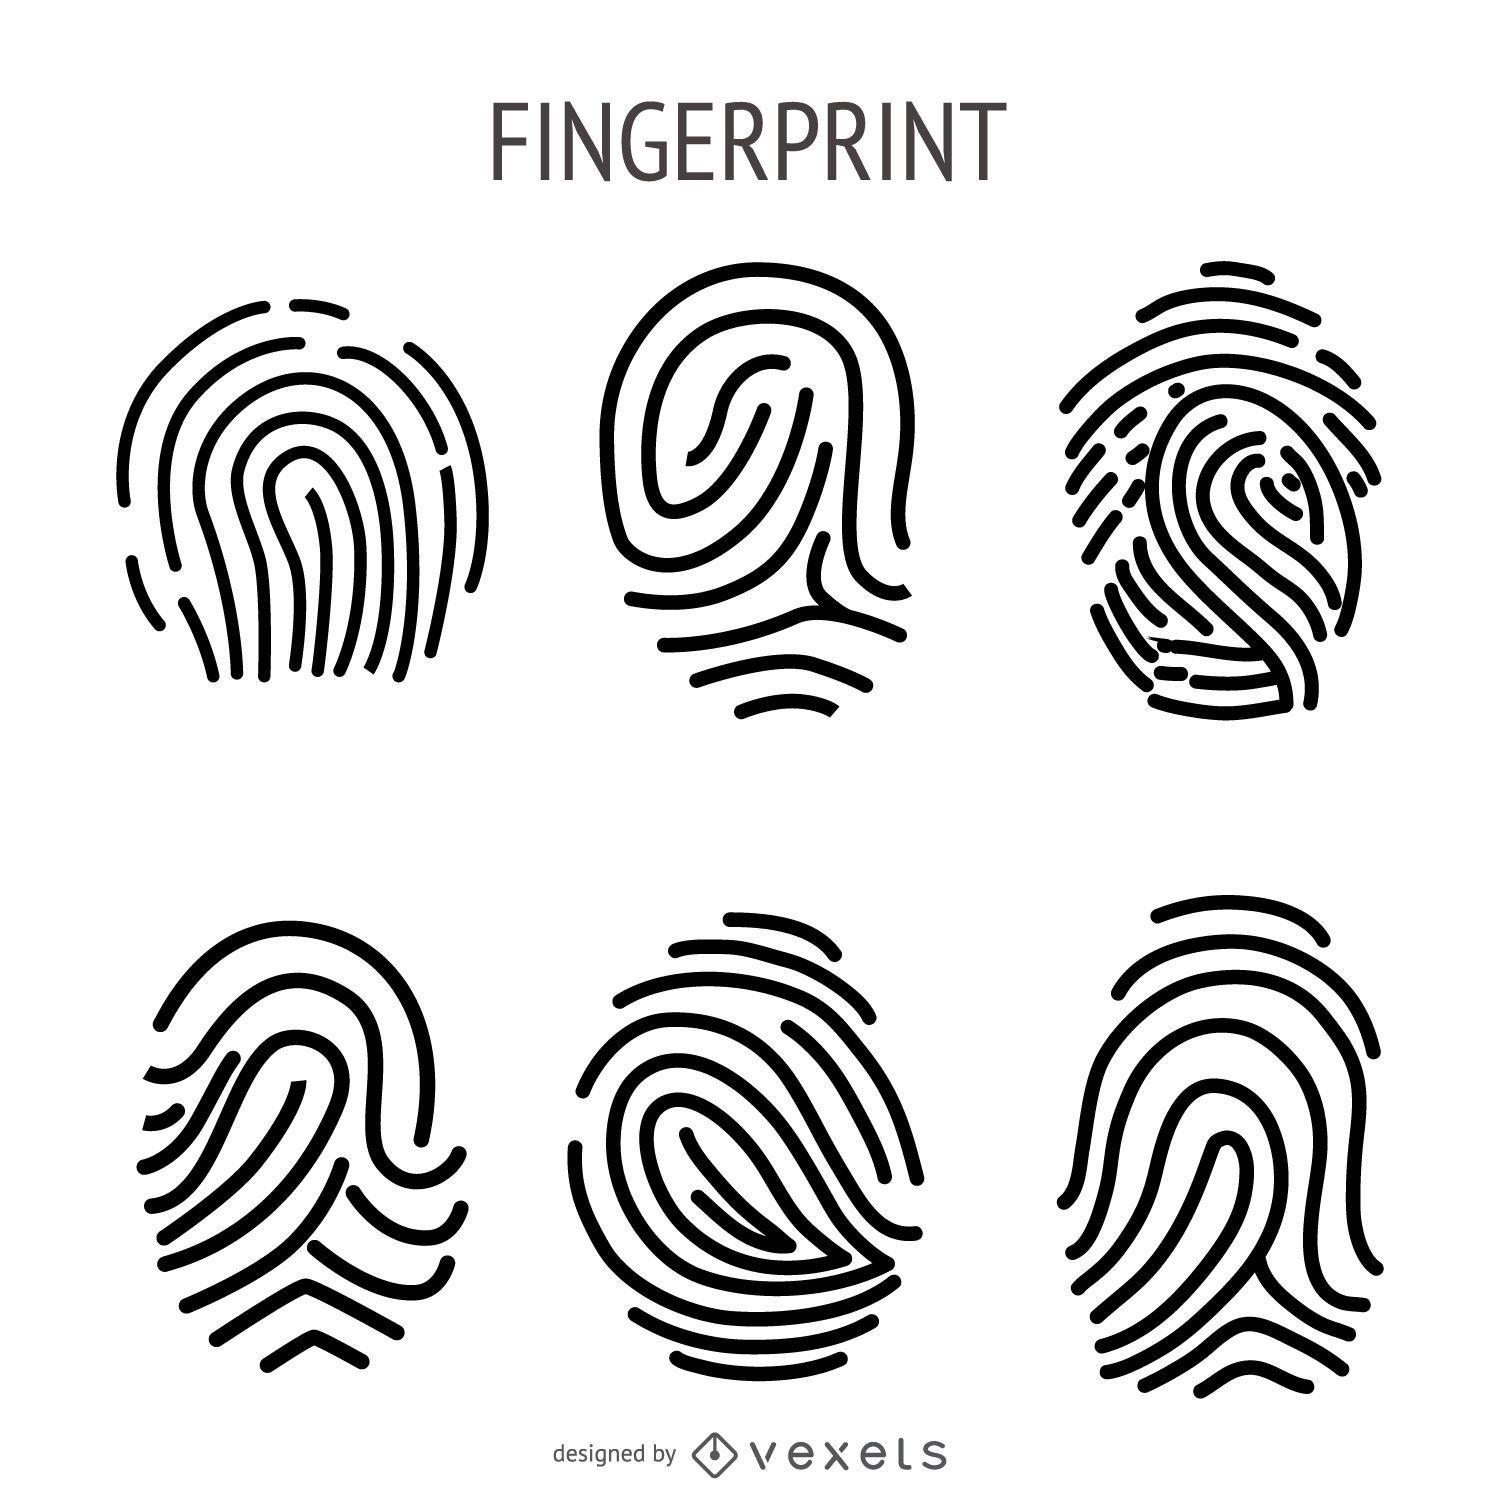 Fingerprint illustration set